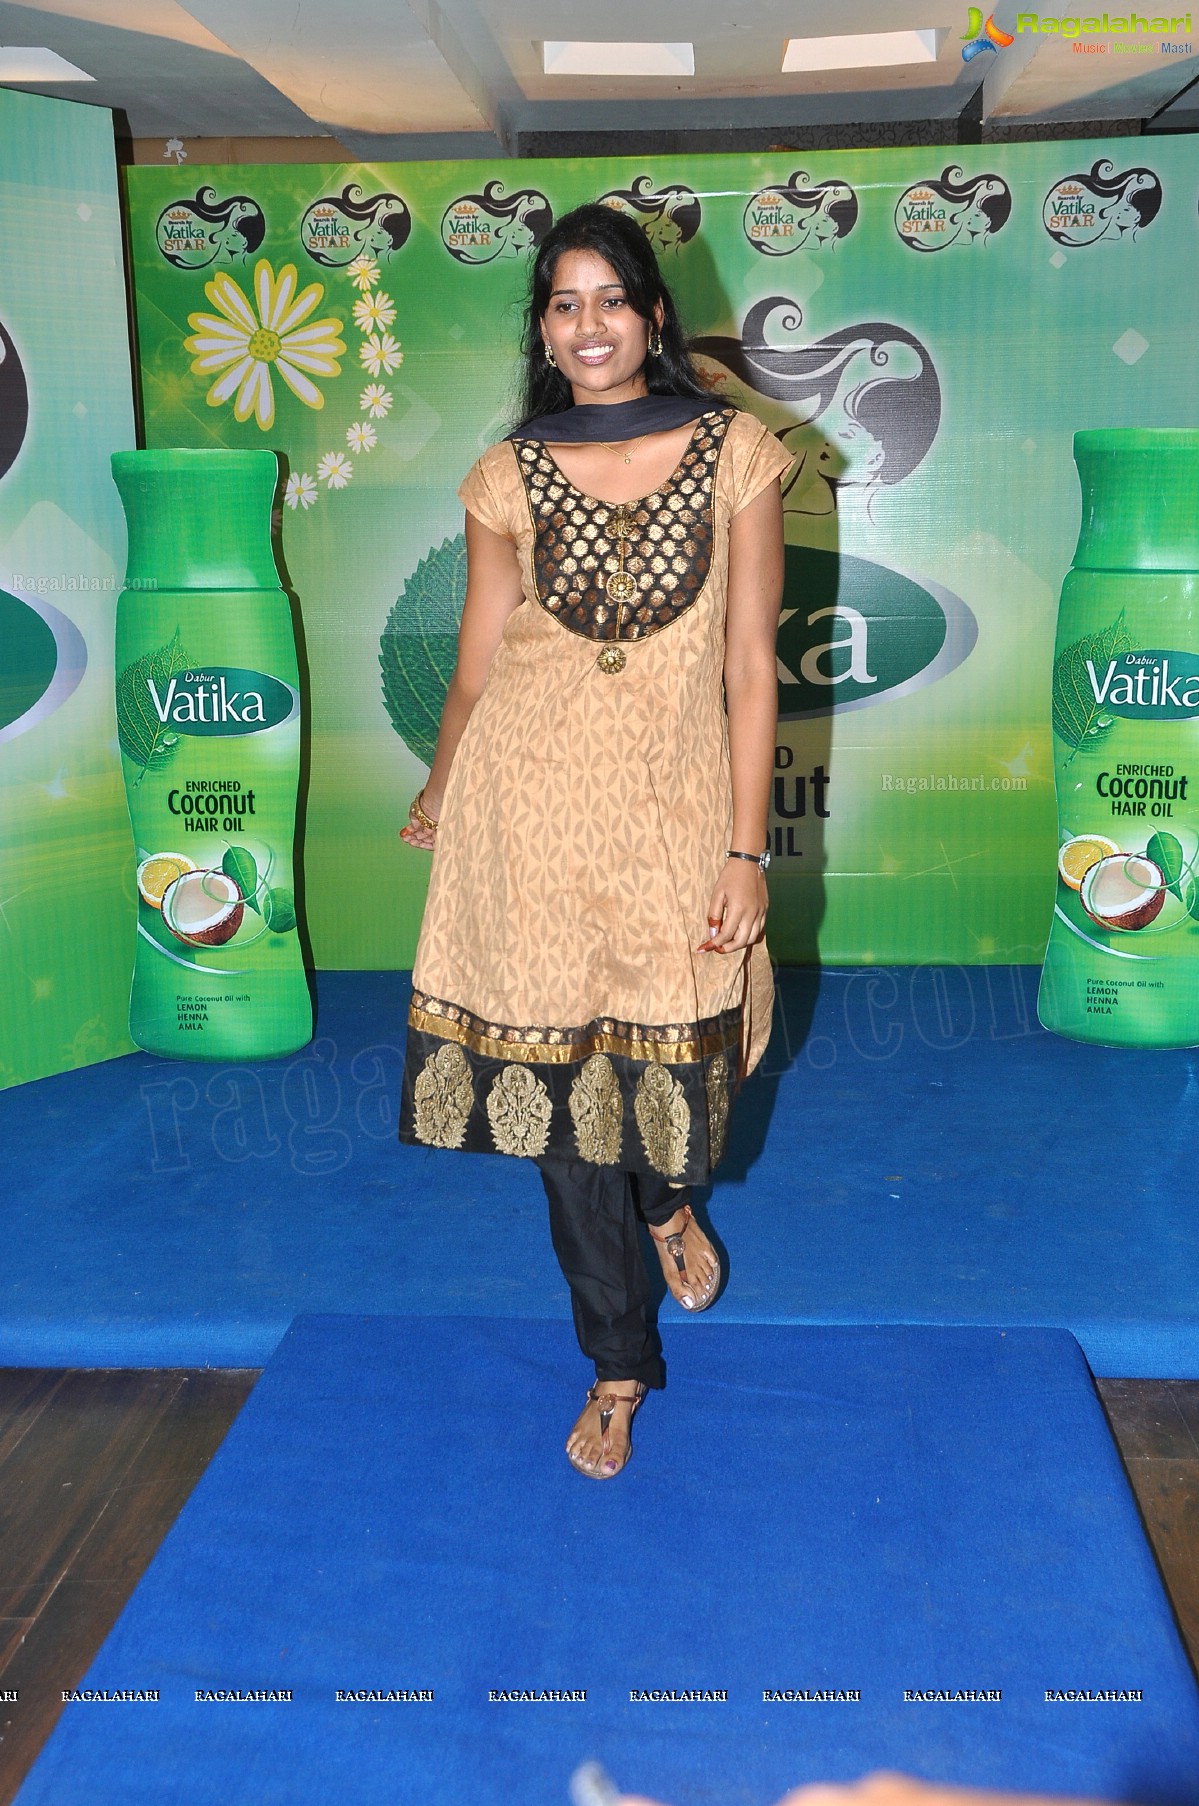 Dabur Vatika - Search for Vatika Star Auditions, Hyderabad